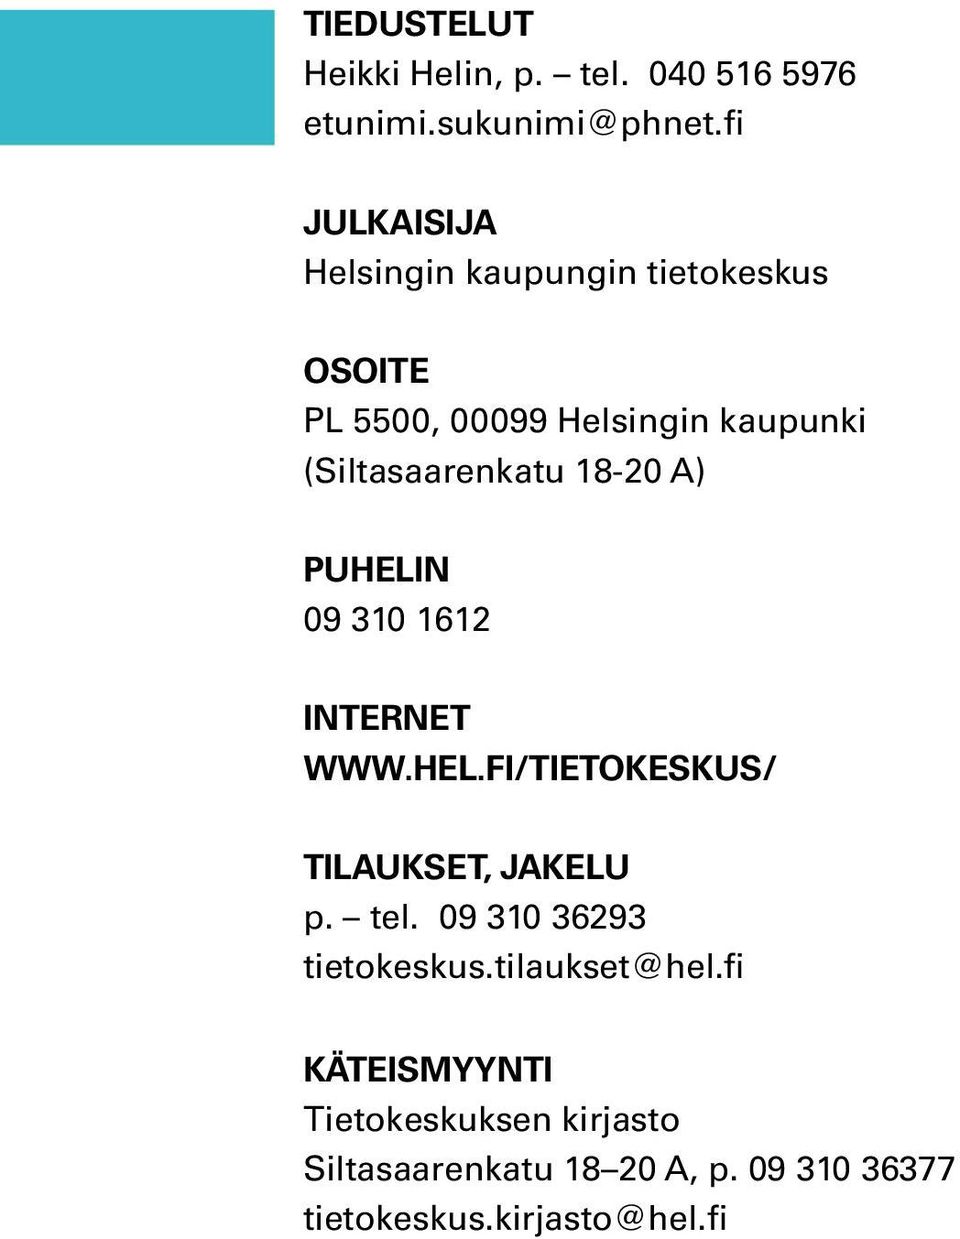 (Siltasaarenkatu 18-20 A) puhelin 09 310 1612 Internet www.hel.fi/tietokeskus/ tilaukset, jakelu p.